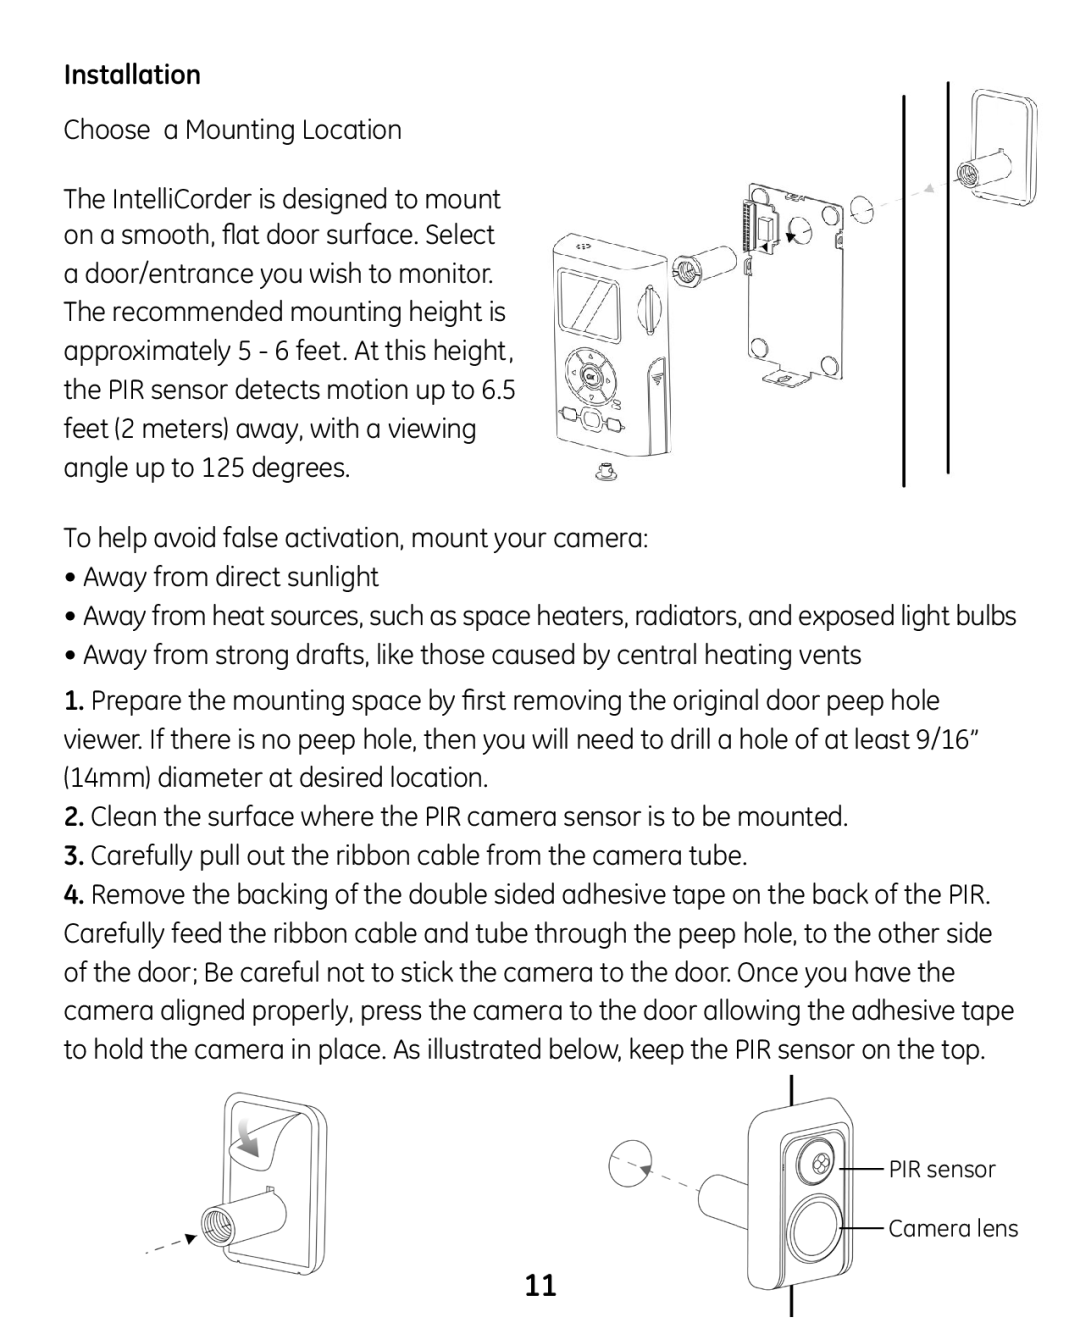 GE 45227-1 manual Installation 